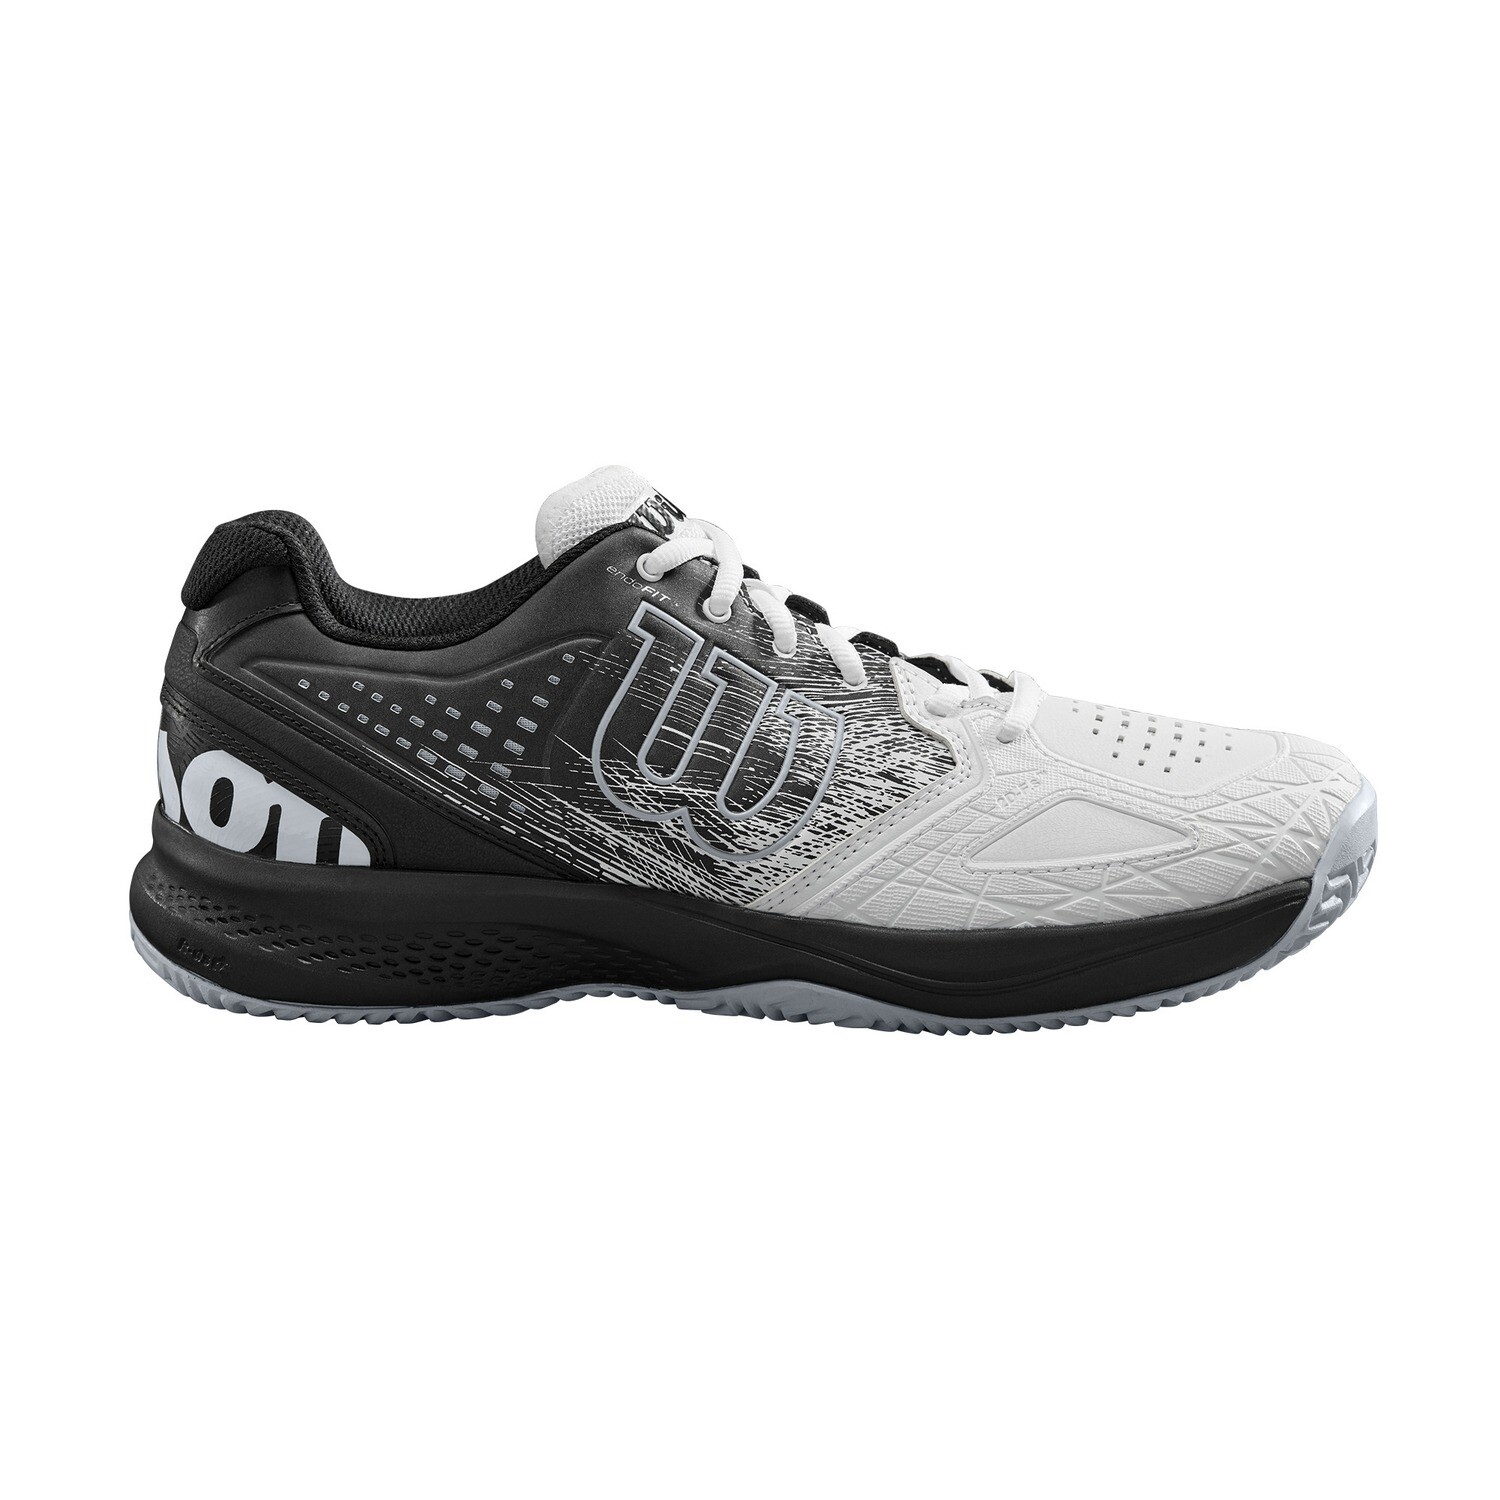 Wilson Kaos Comp 2.0 Men's Tennis Shoes - White